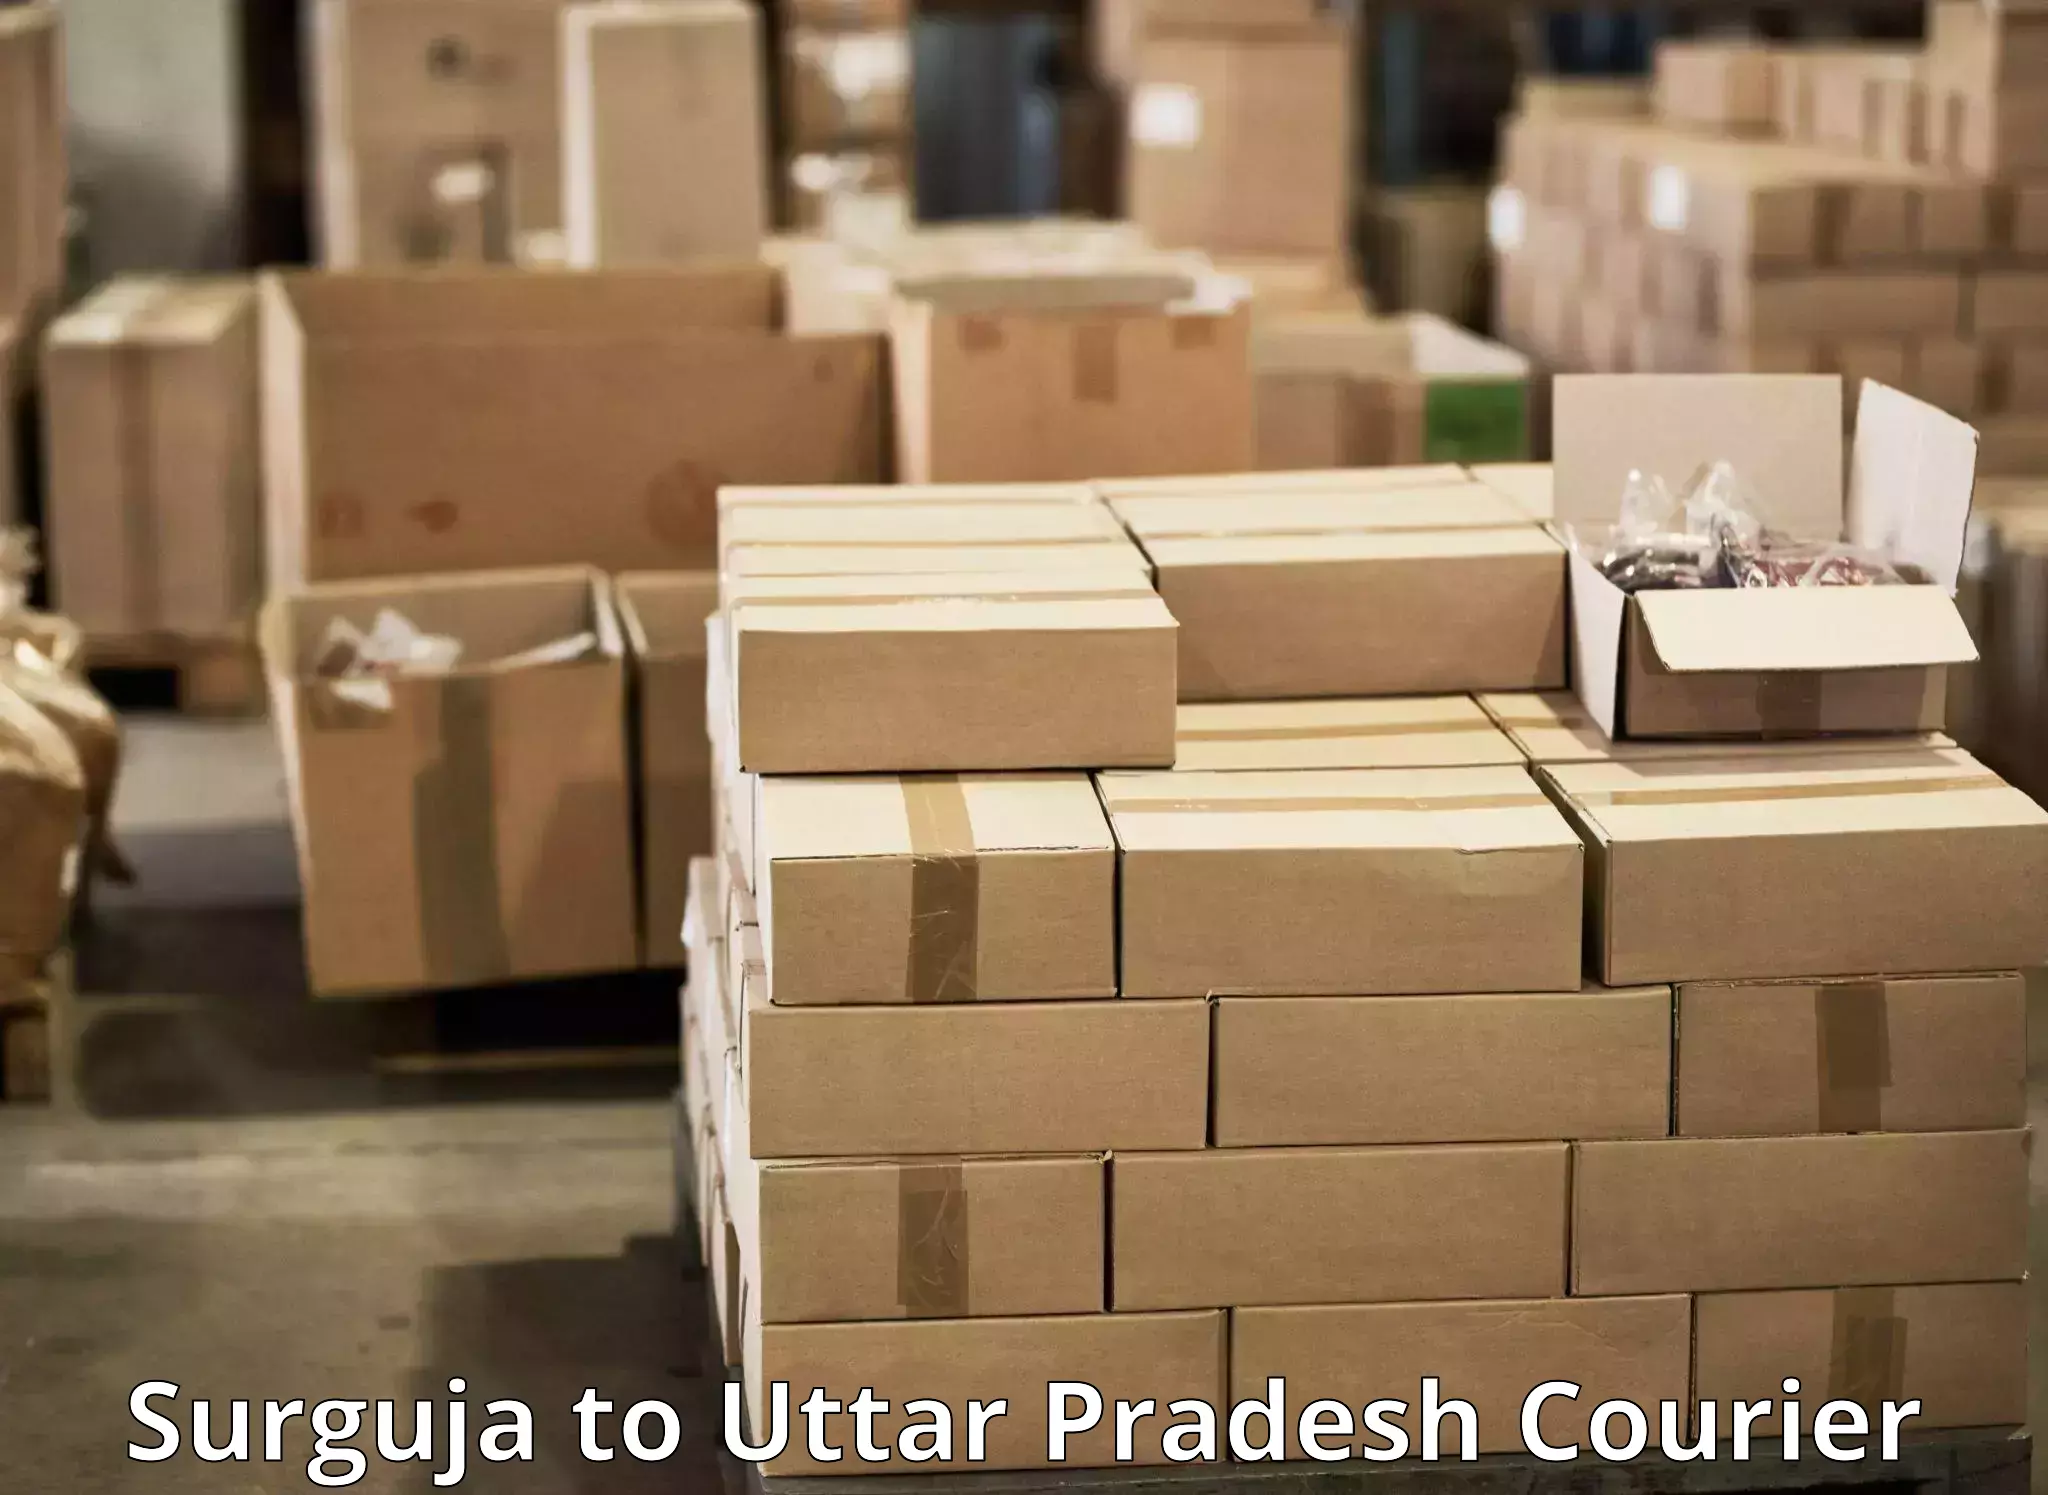 High-priority parcel service Surguja to Gopiganj